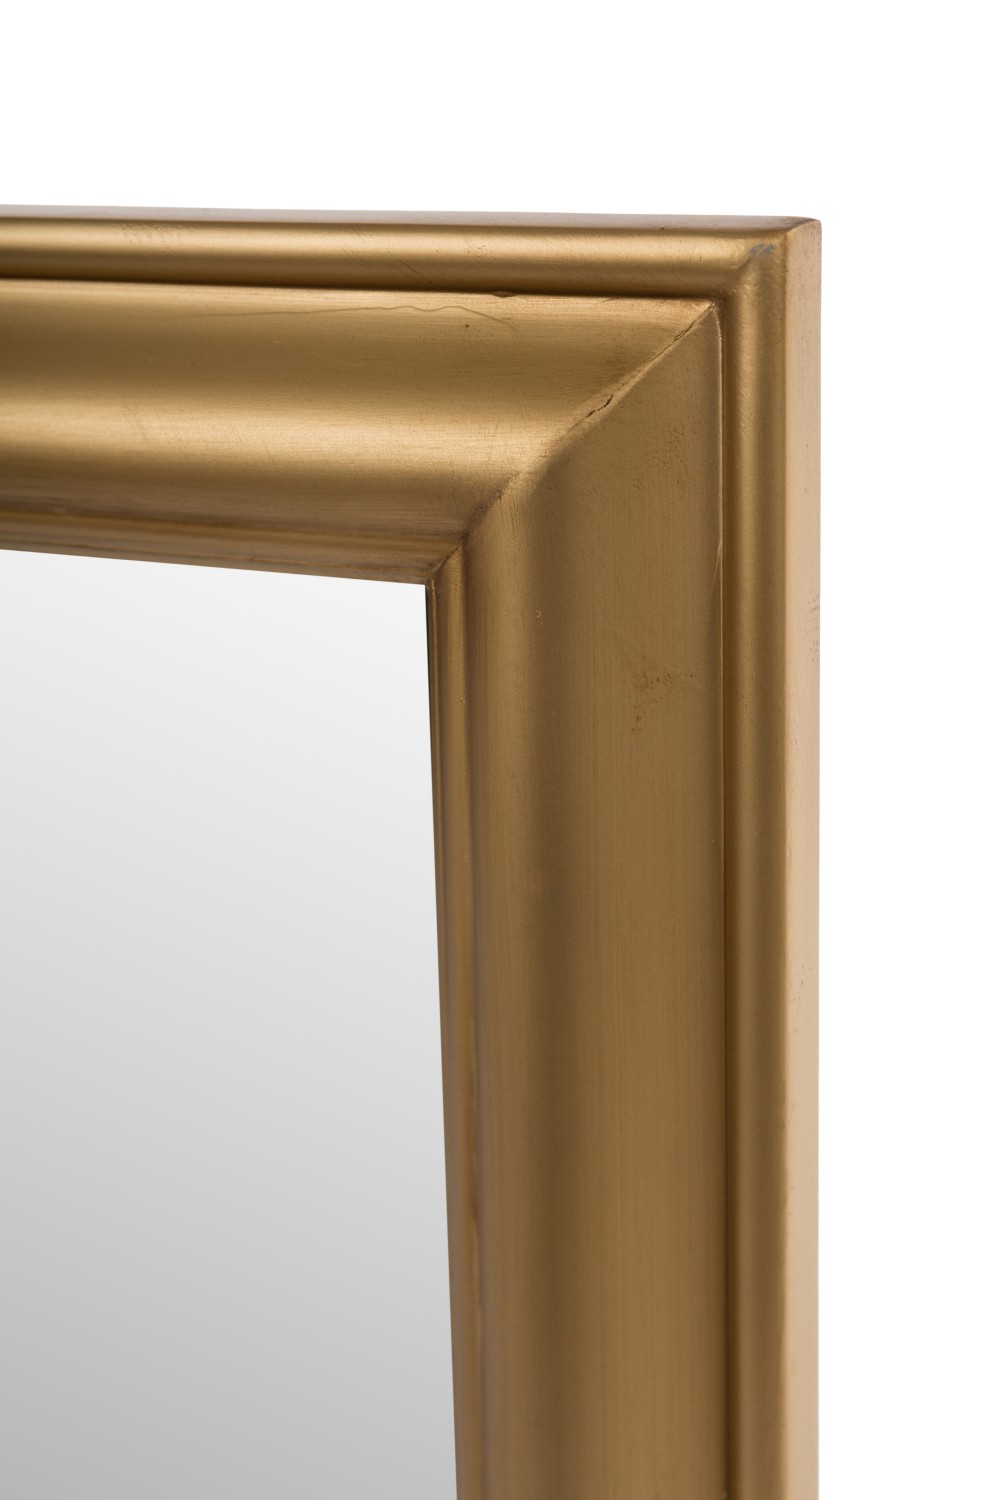 Spiegel Asil I, gold - 52x62 cm